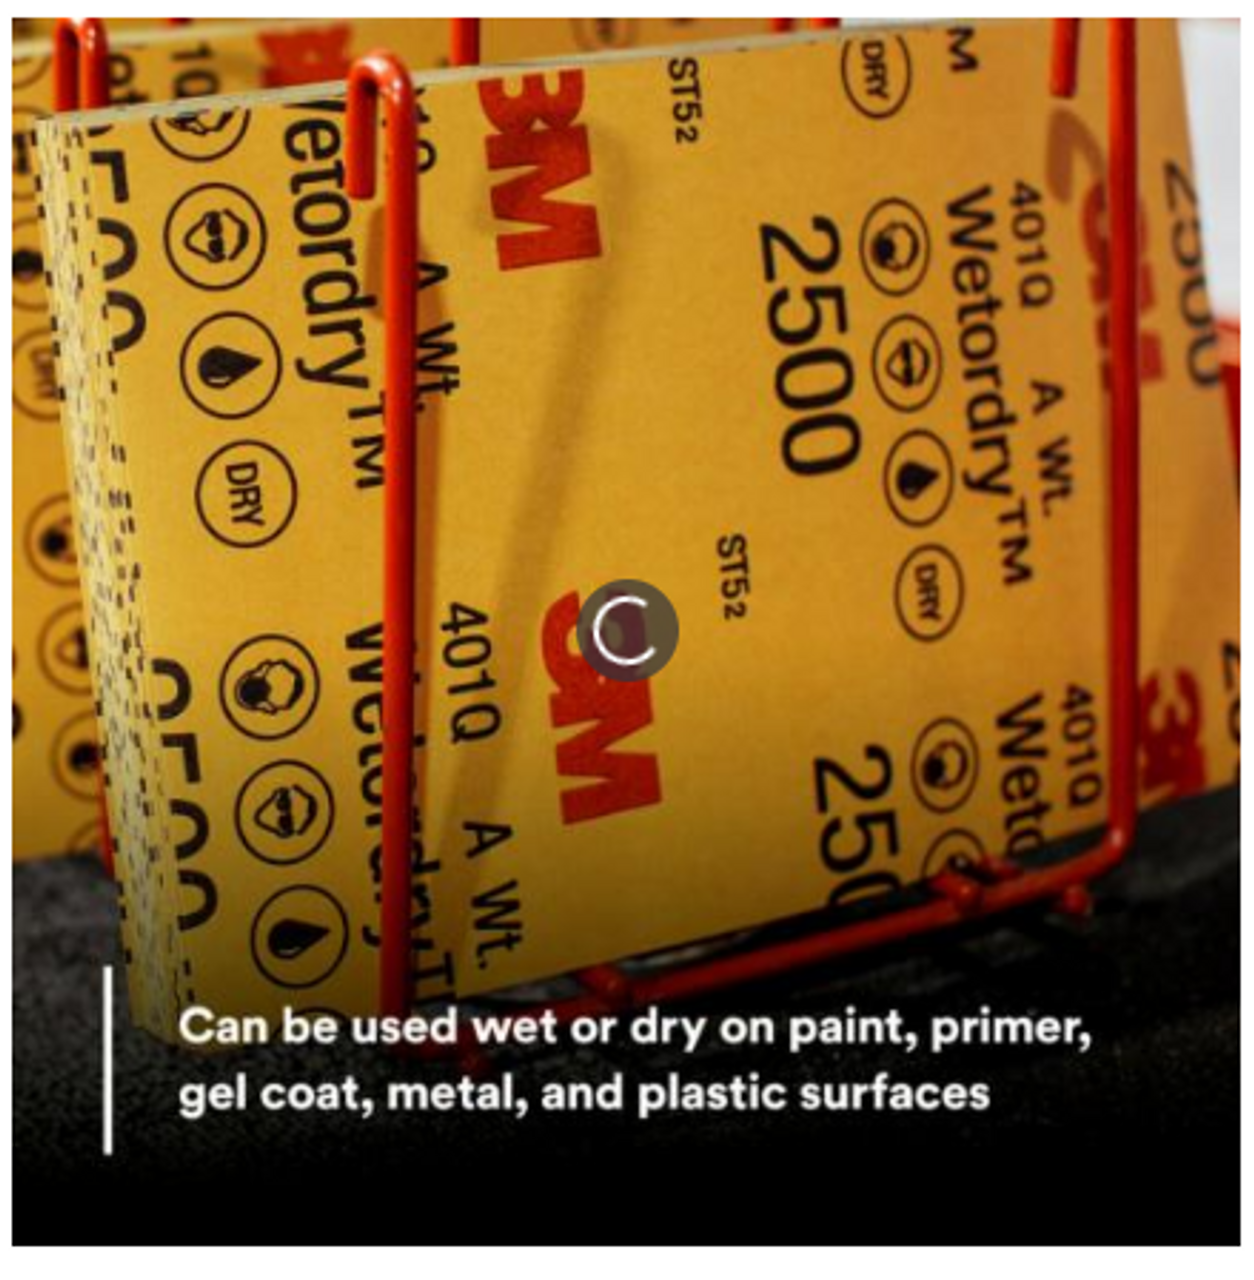 3M™ Wetordry™ Abrasive Sheet 2500 Grit  5 1/2 x 9 in 50 sheets per carton